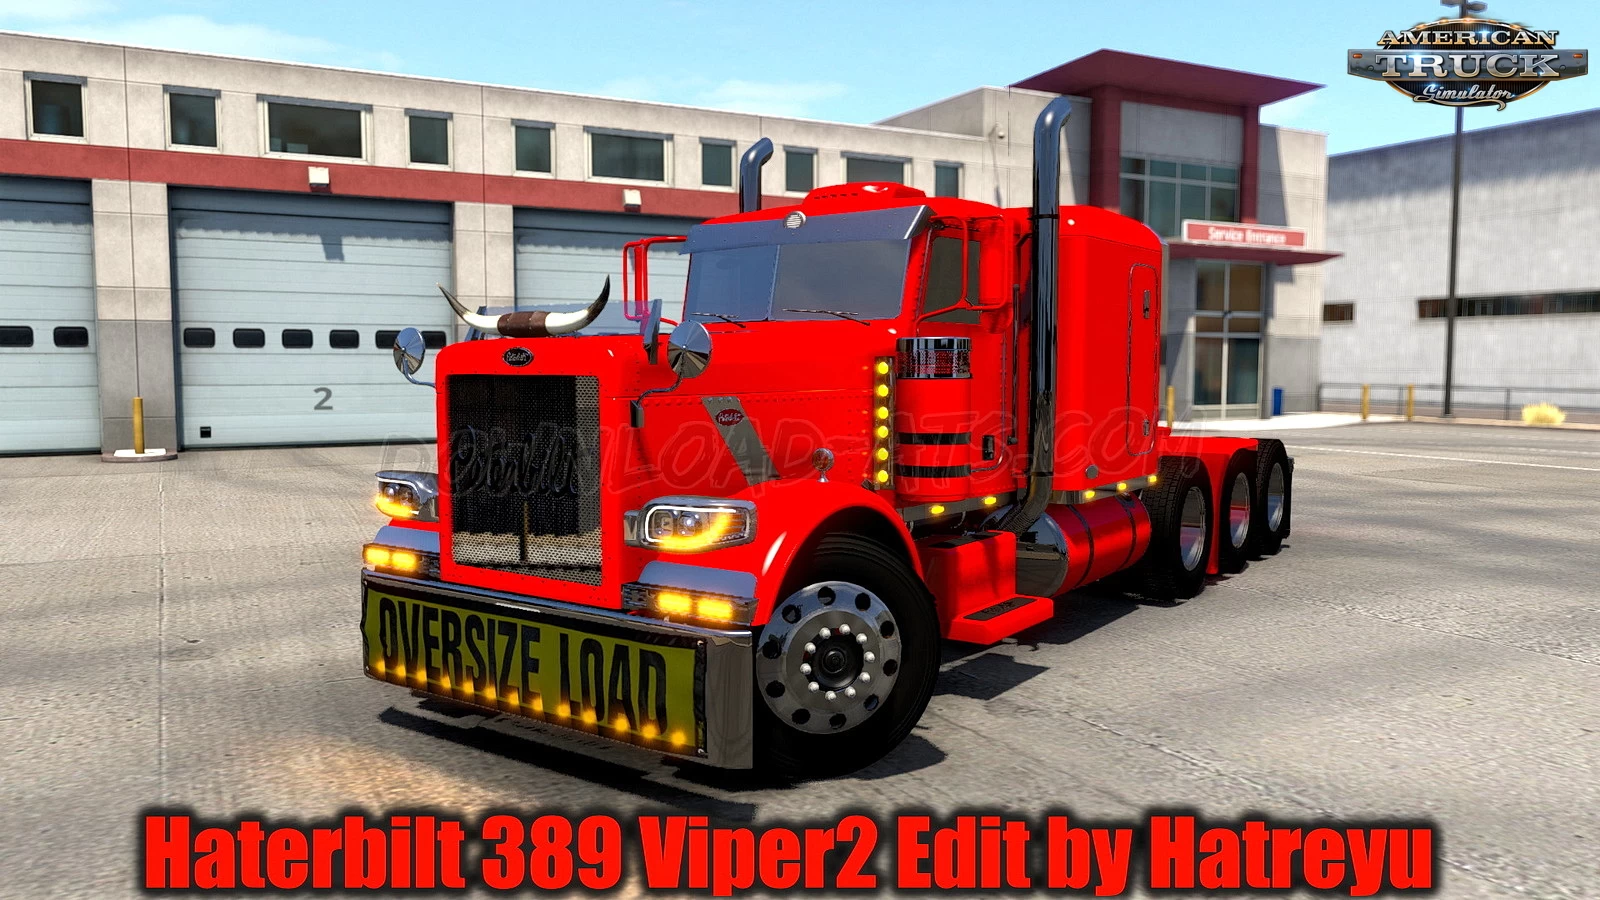 Haterbilt 389 Viper2 v4.4 Edit by Hatreyu (1.47.x) for ATS